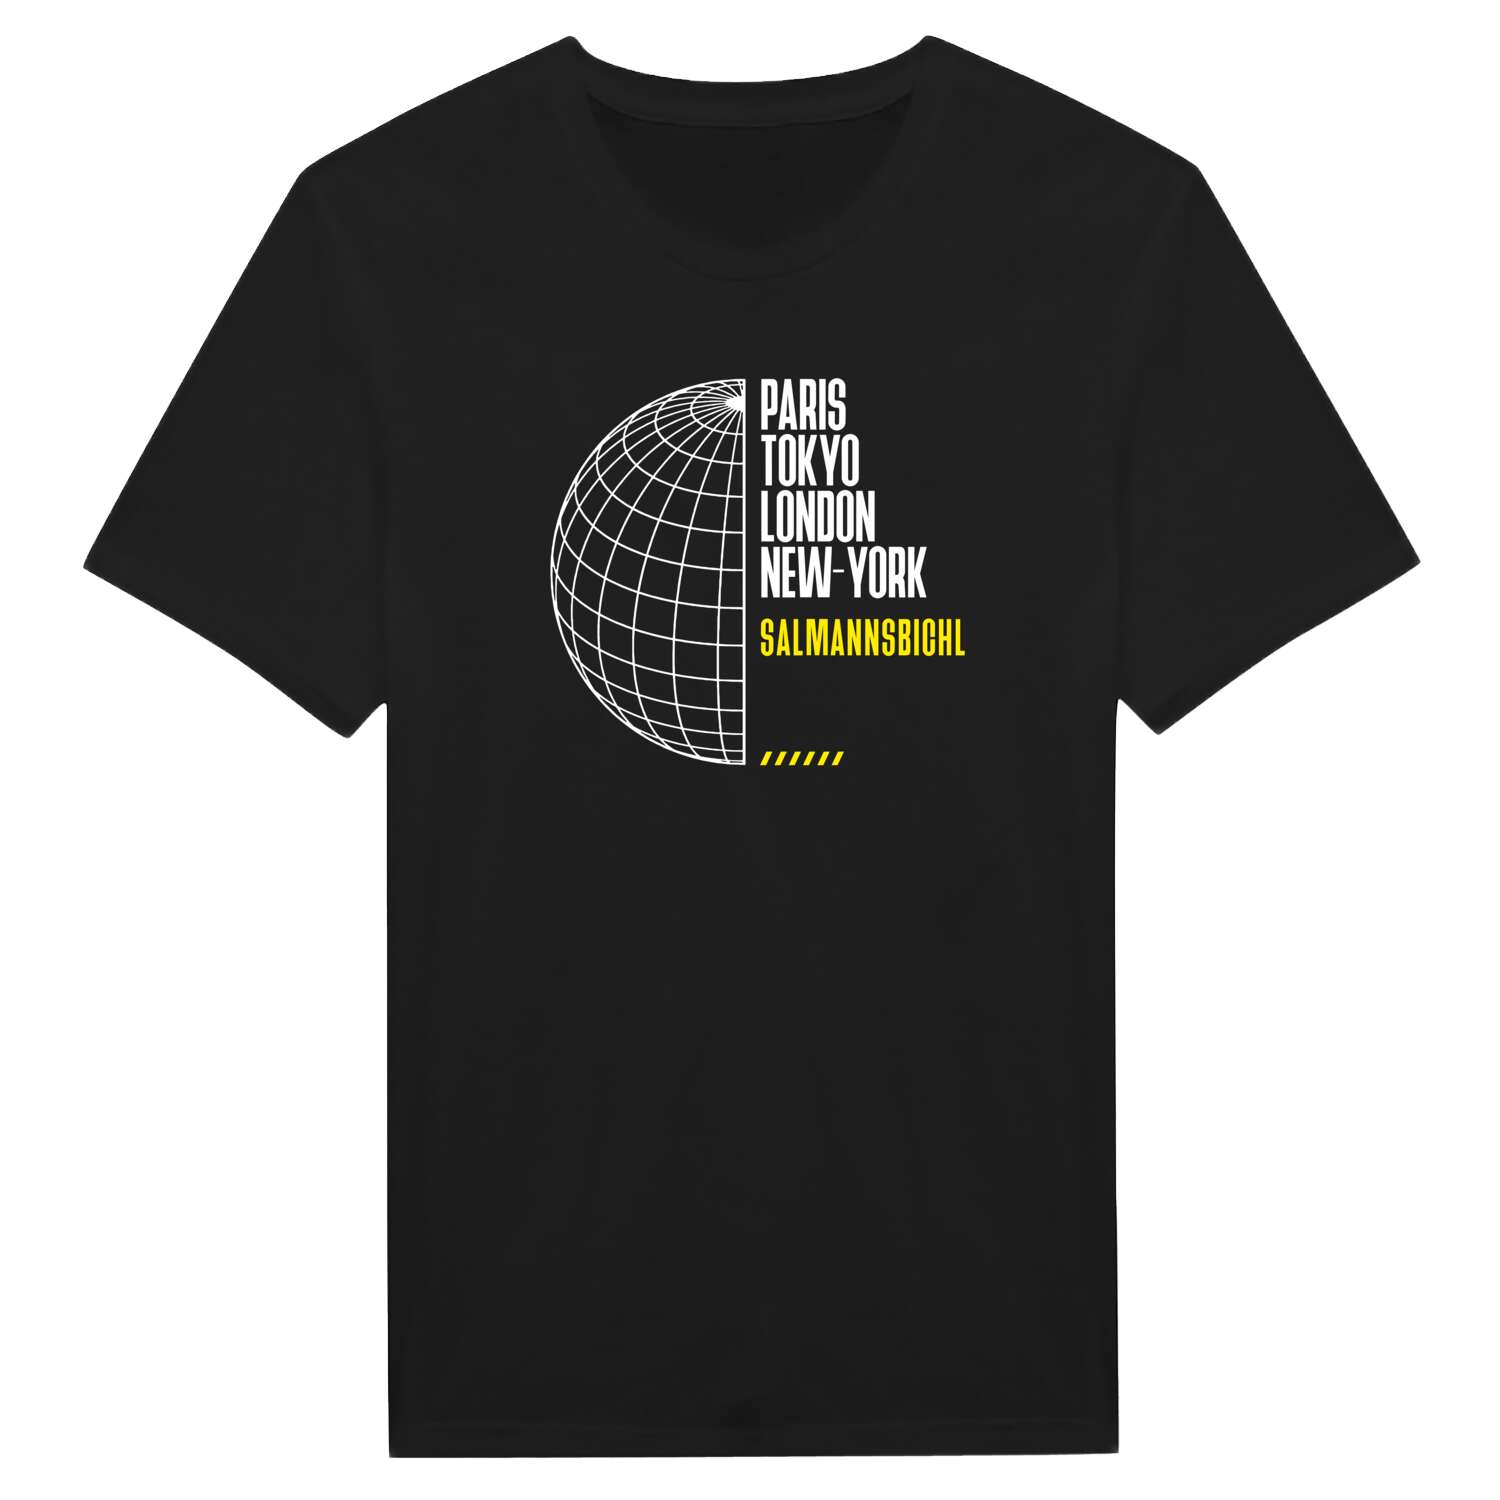 Salmannsbichl T-Shirt »Paris Tokyo London«